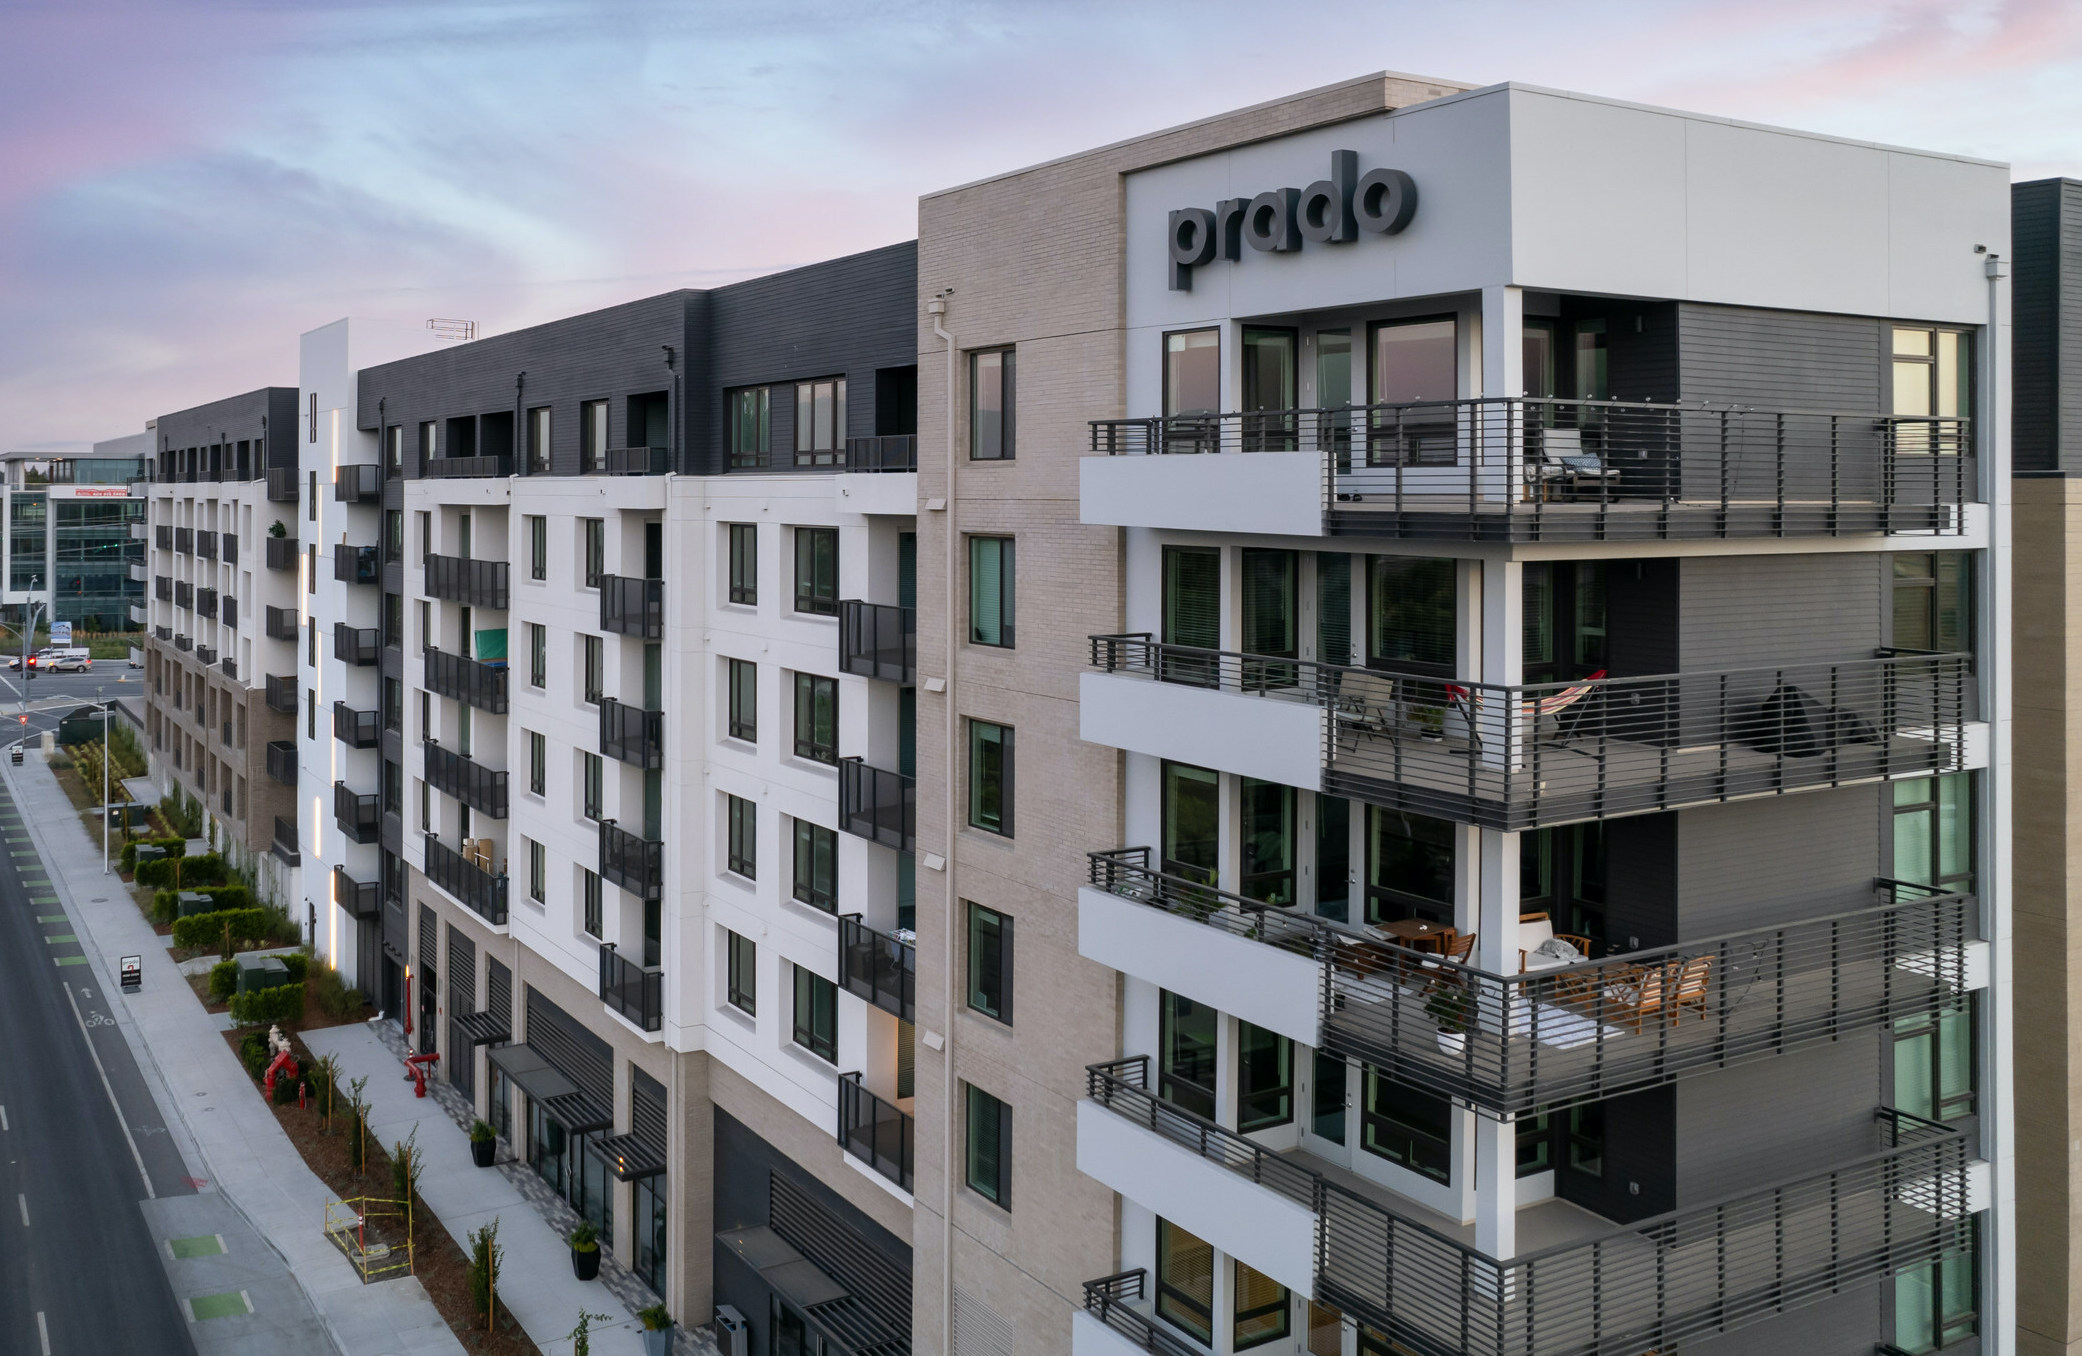 SummerHill Completes $125 Million Disposition of 251-Unit Transit-Oriented Prado Apartment Community in California Bay Area Market